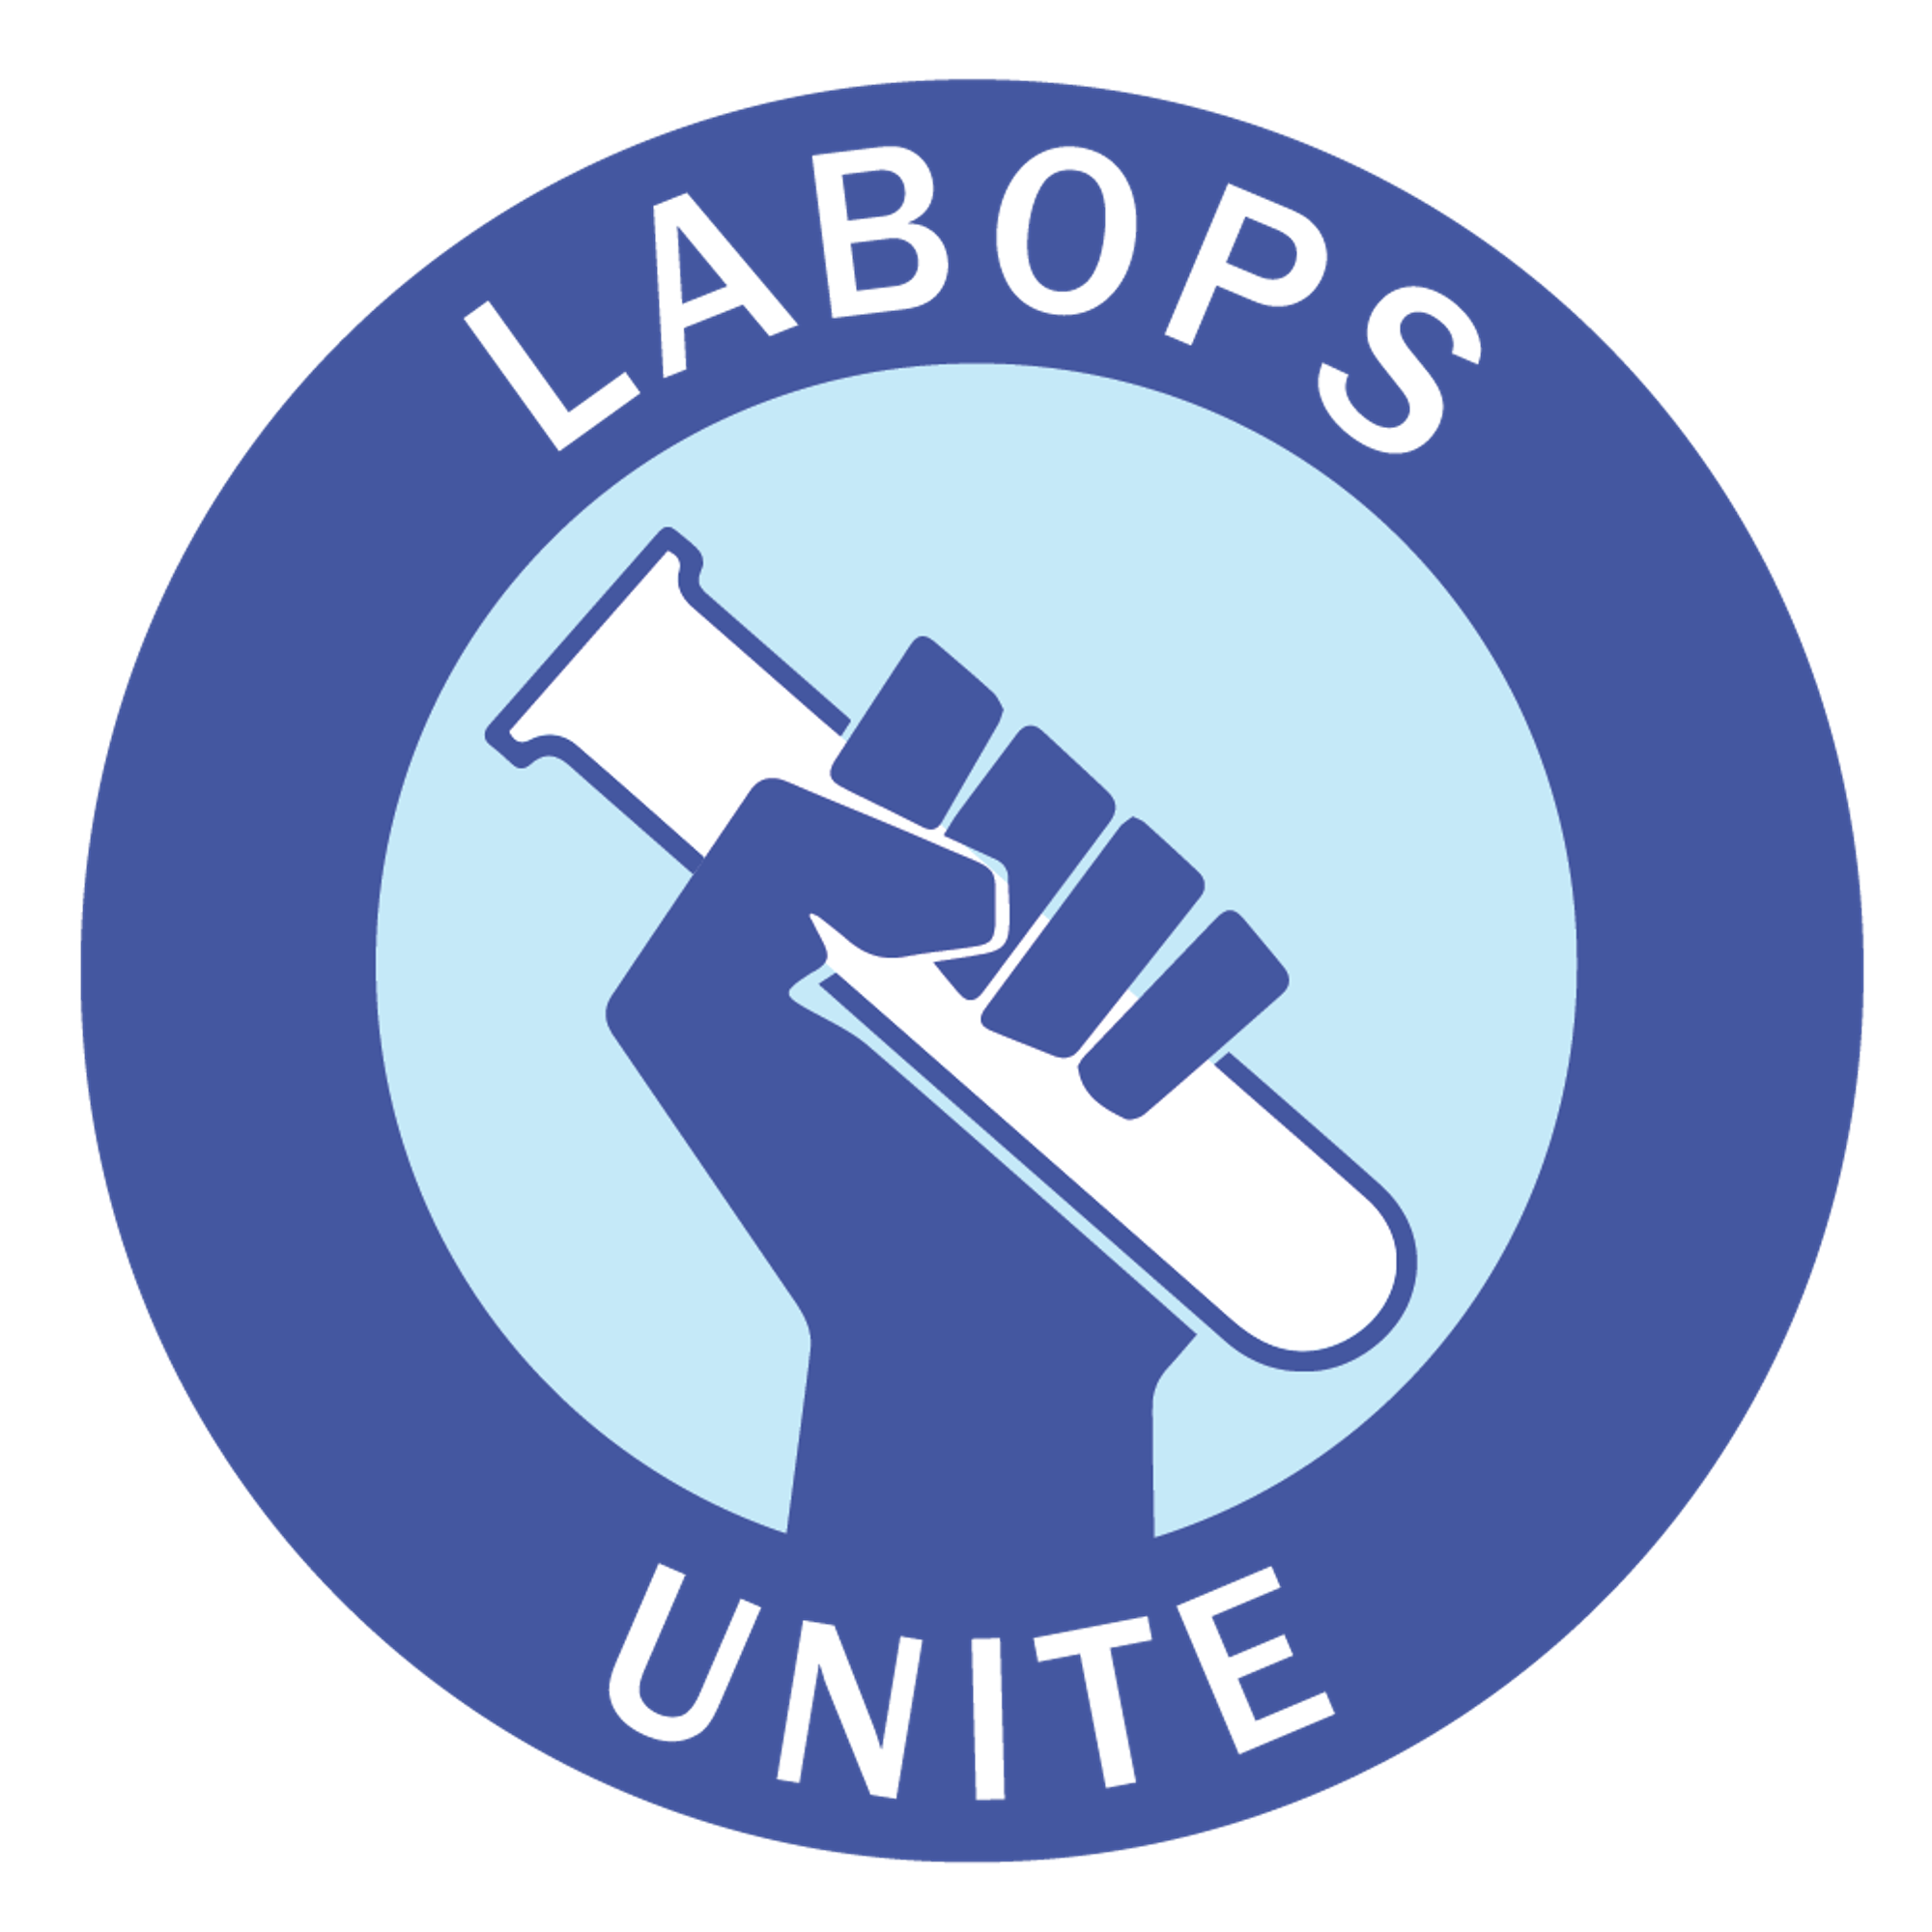 LabOps Unite Homepage